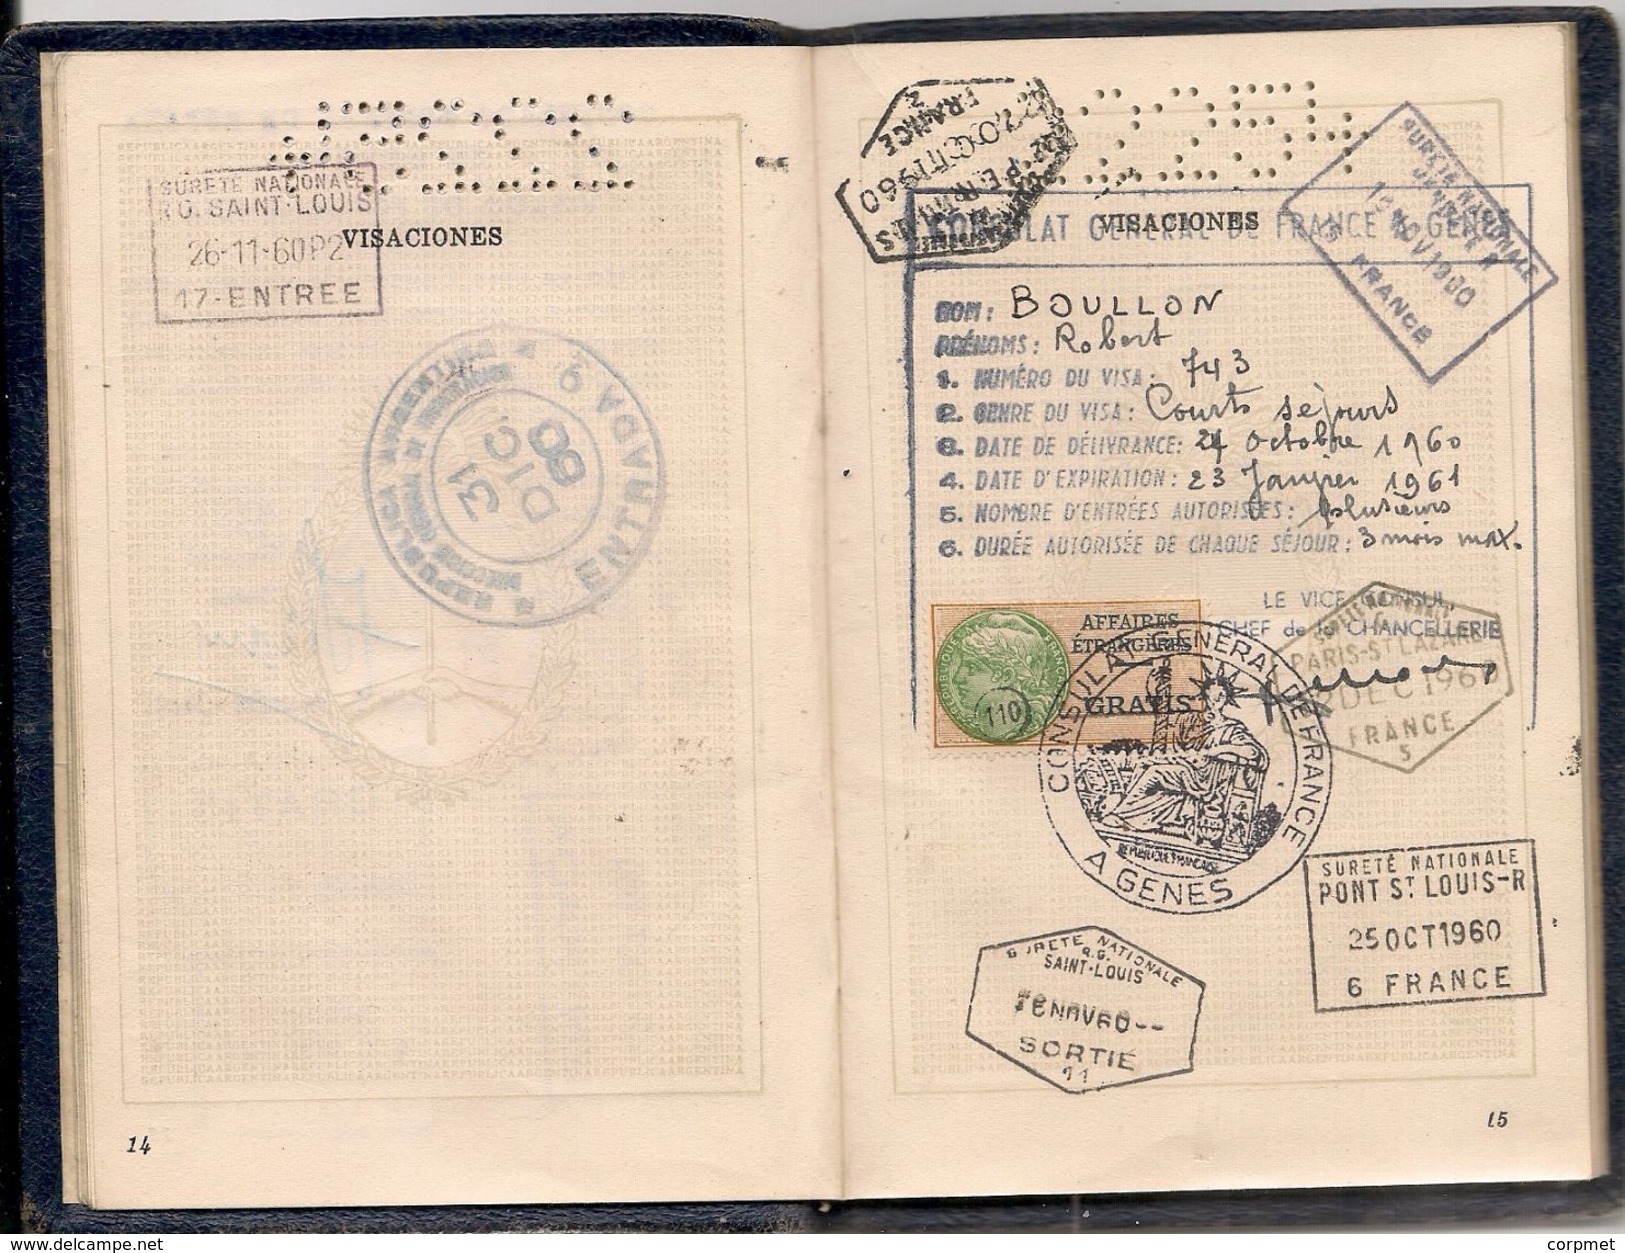 ARGENTINA 1960 CONSULAR PASAPORTE - PASSPORT - PASSEPORT - issued in GENOVA - fine FRANCE REVENUE GRATIS stamp -scan 6-